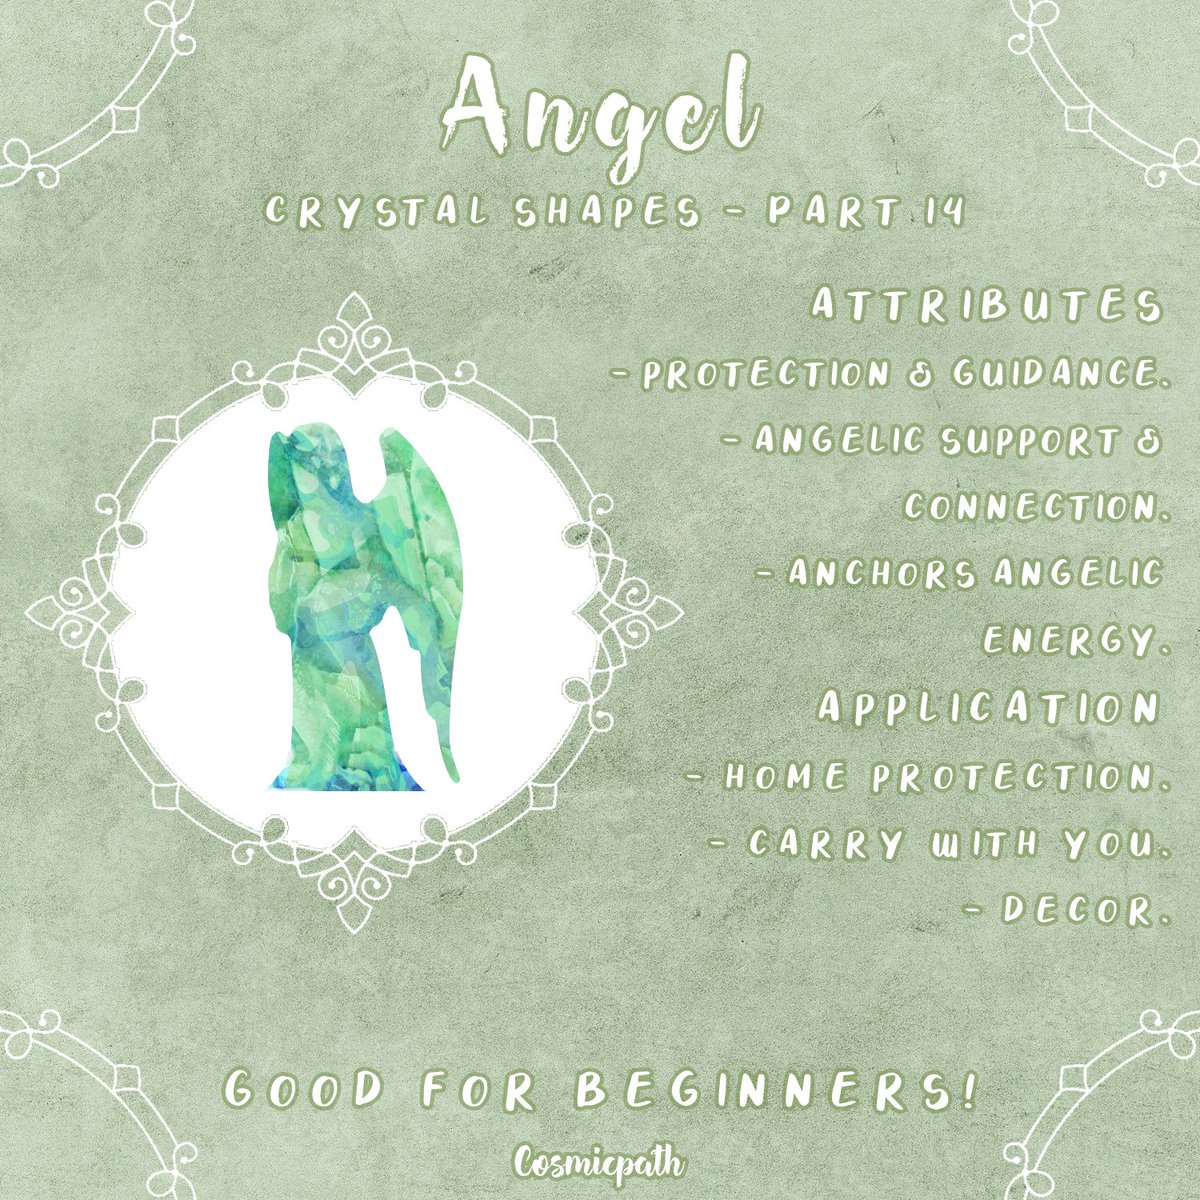 Crystal healing - Shapes - Part 14
#angelic #angel #angelhealing #spiritualmedium #emotionalhealing